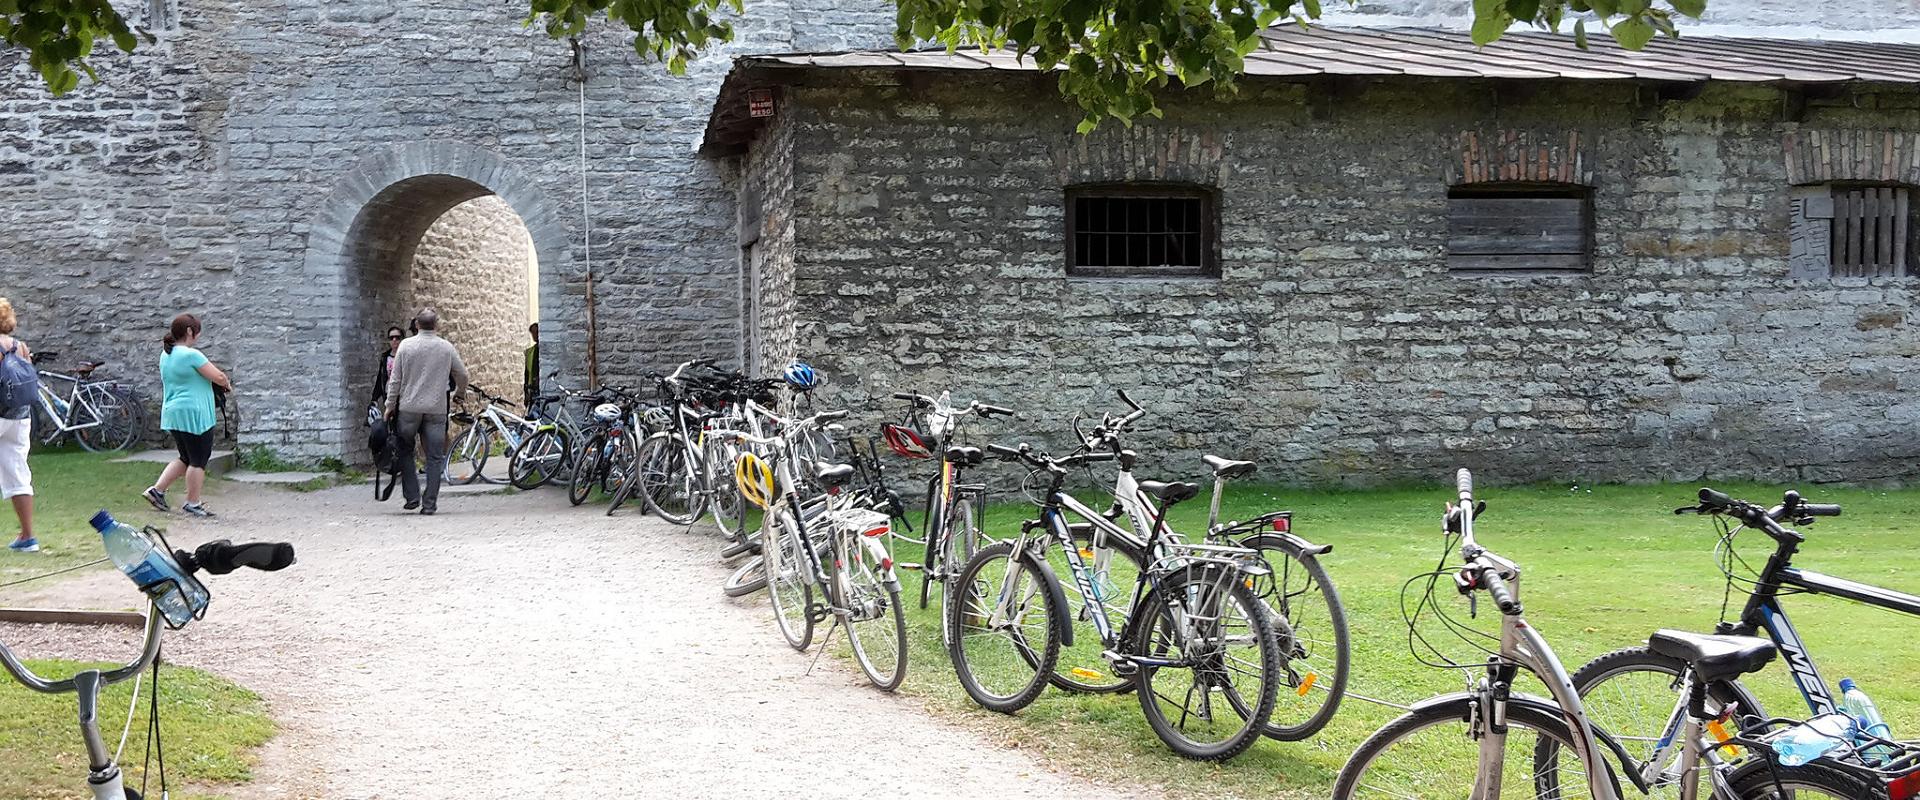 City Bike — bicycle rental